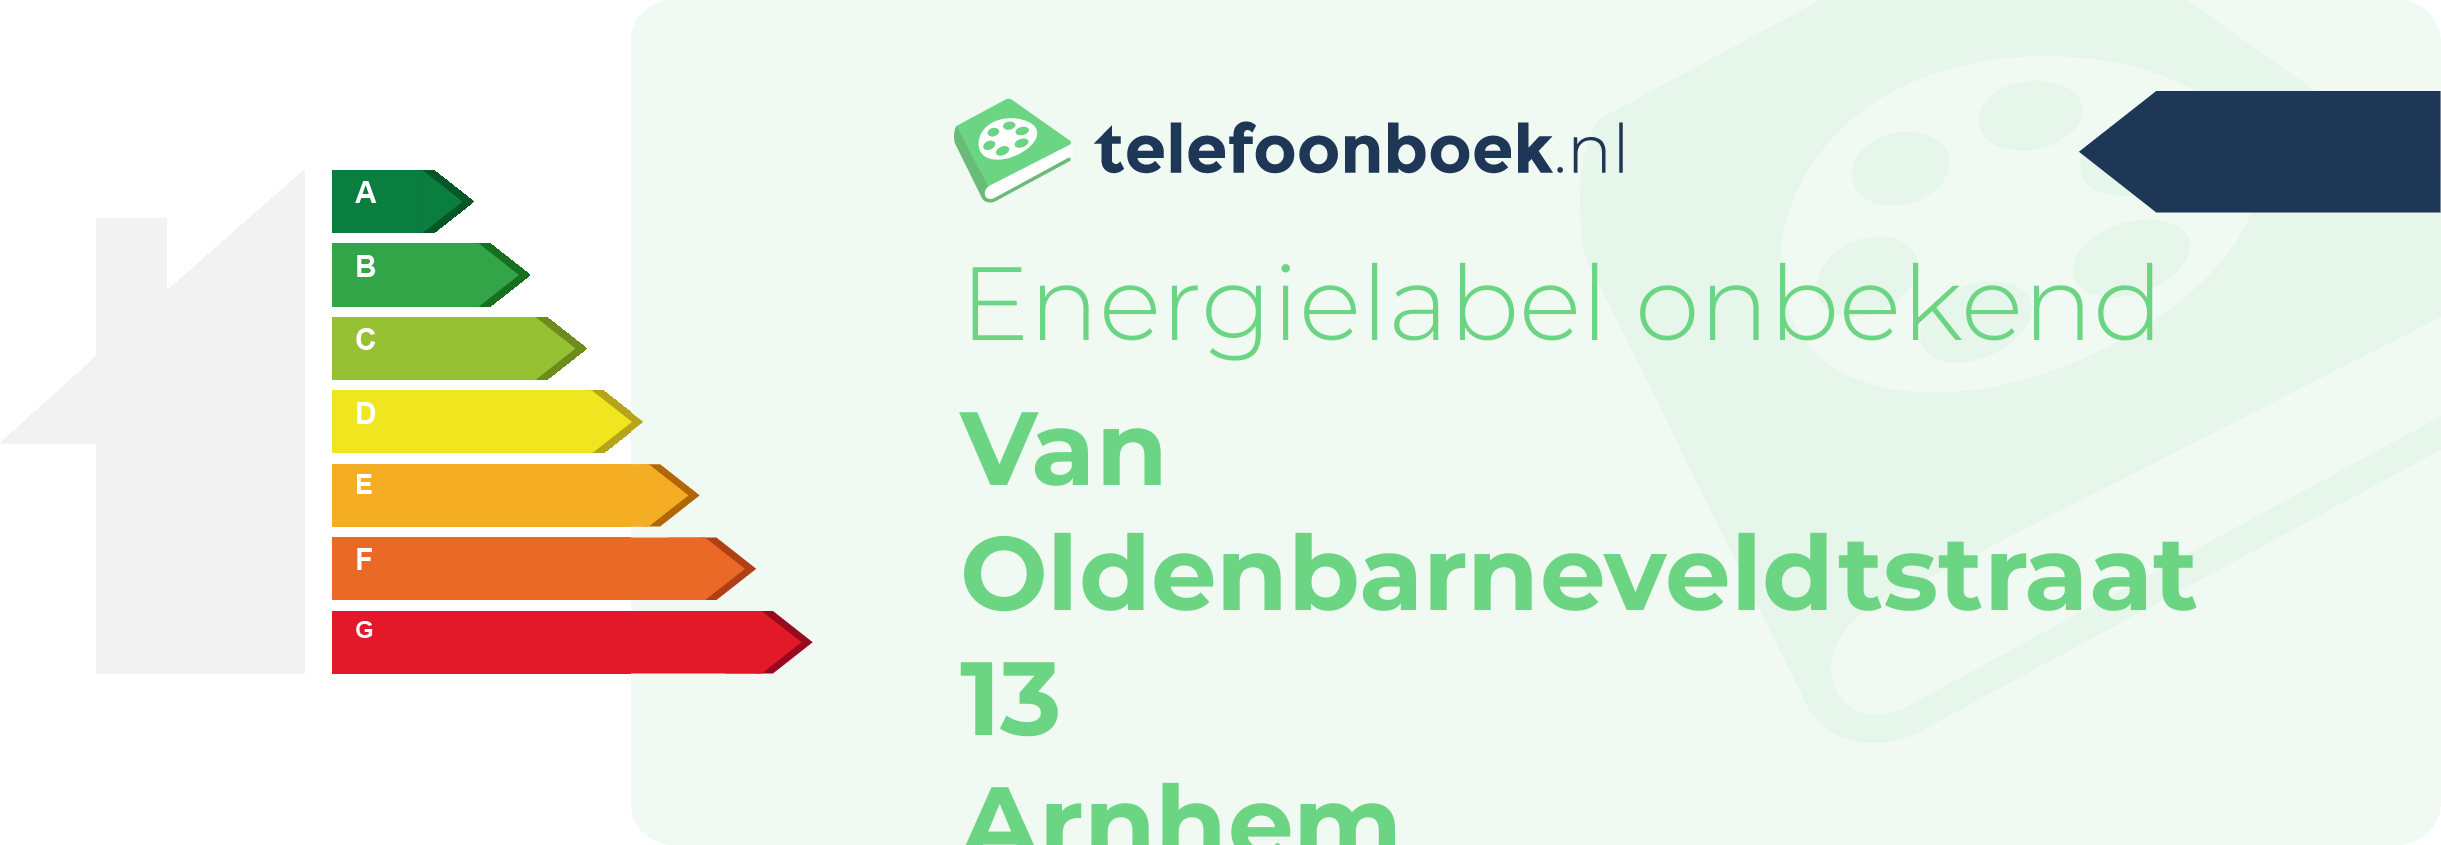 Energielabel Van Oldenbarneveldtstraat 13 Arnhem